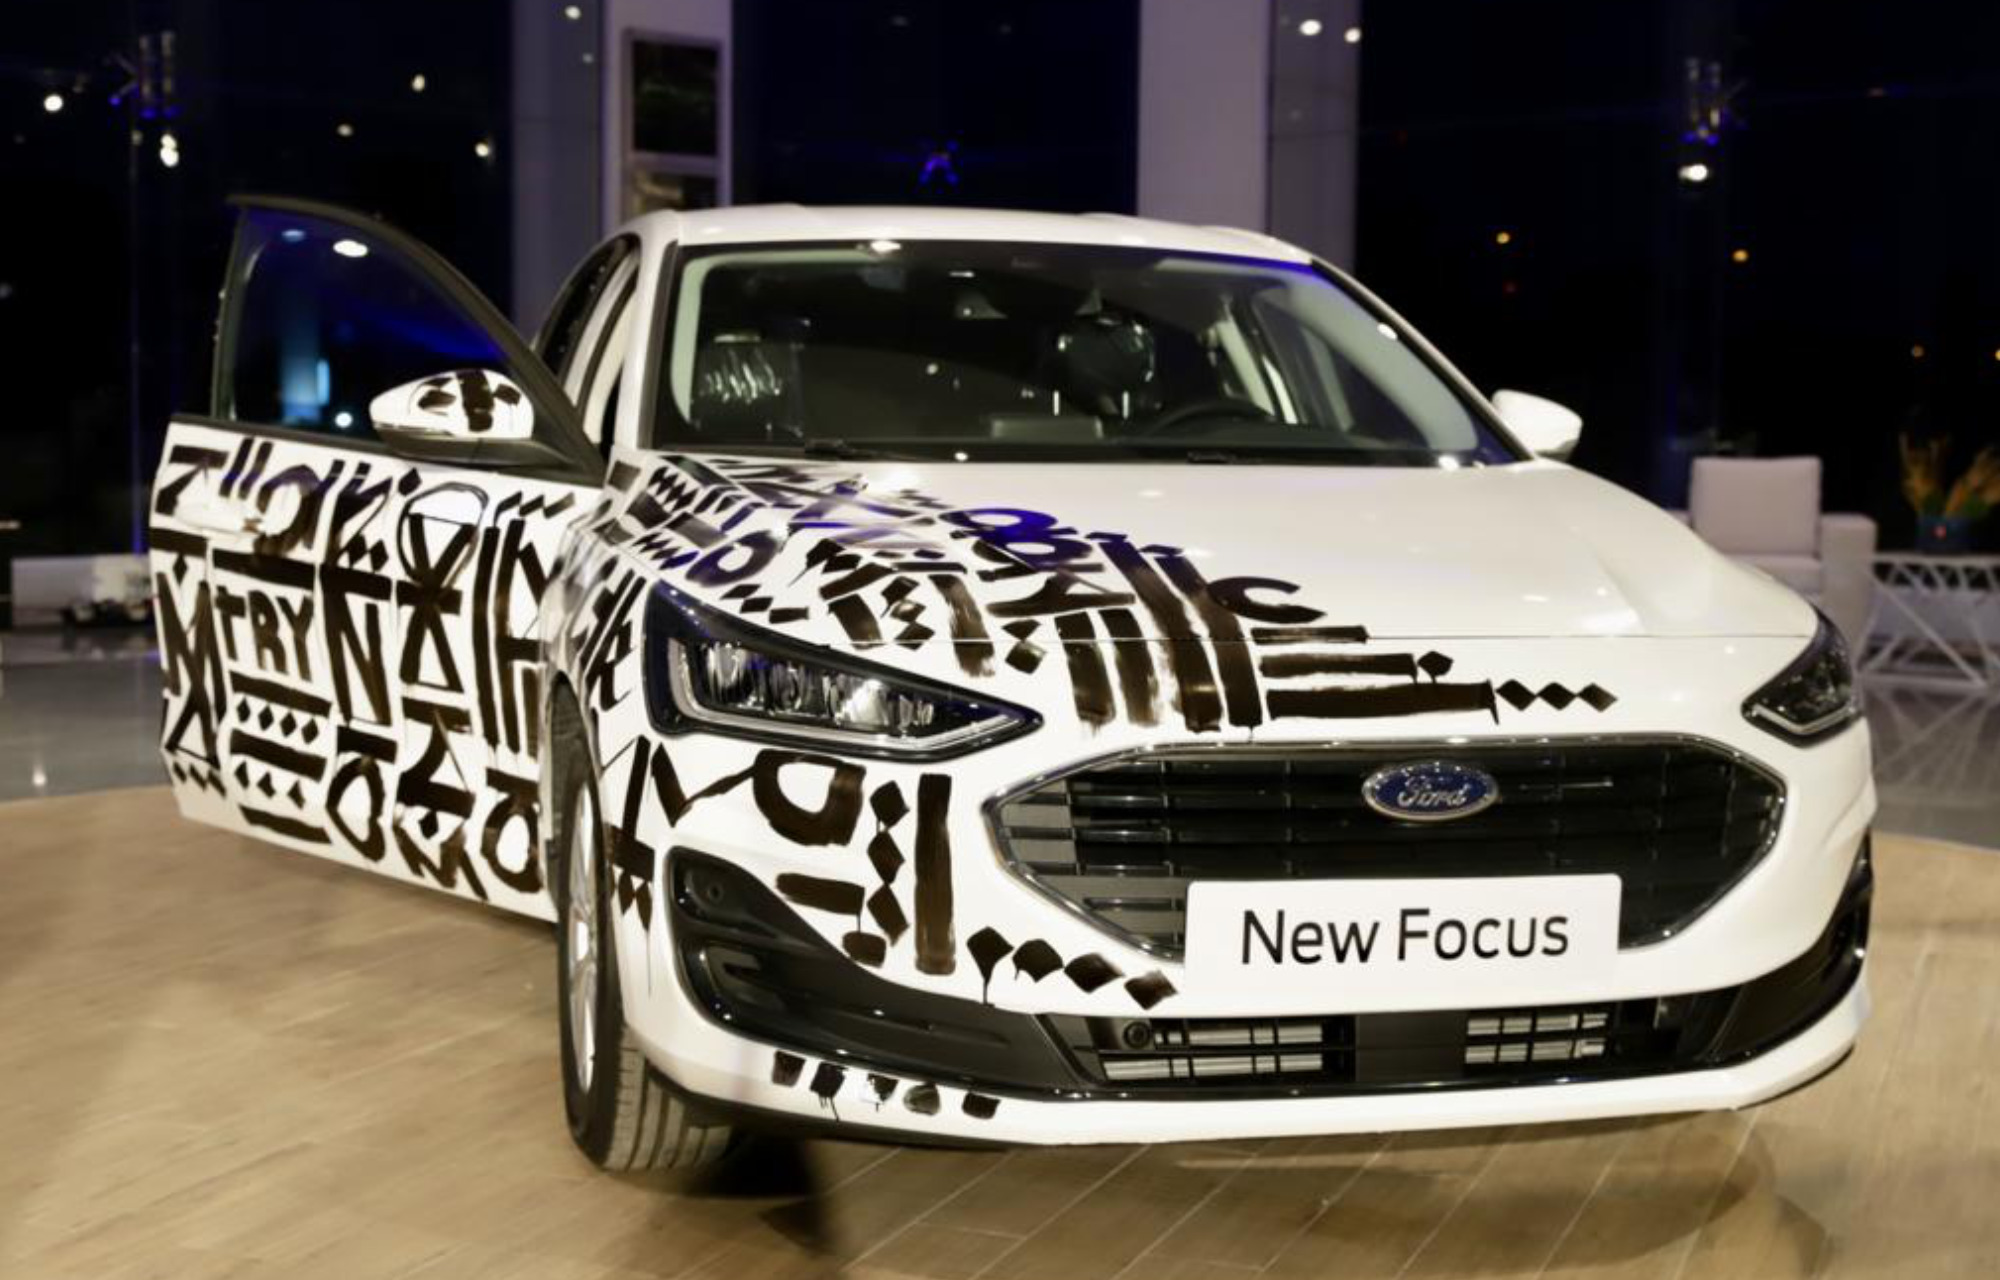 Alpha Ford Tunisie - Ford Focus